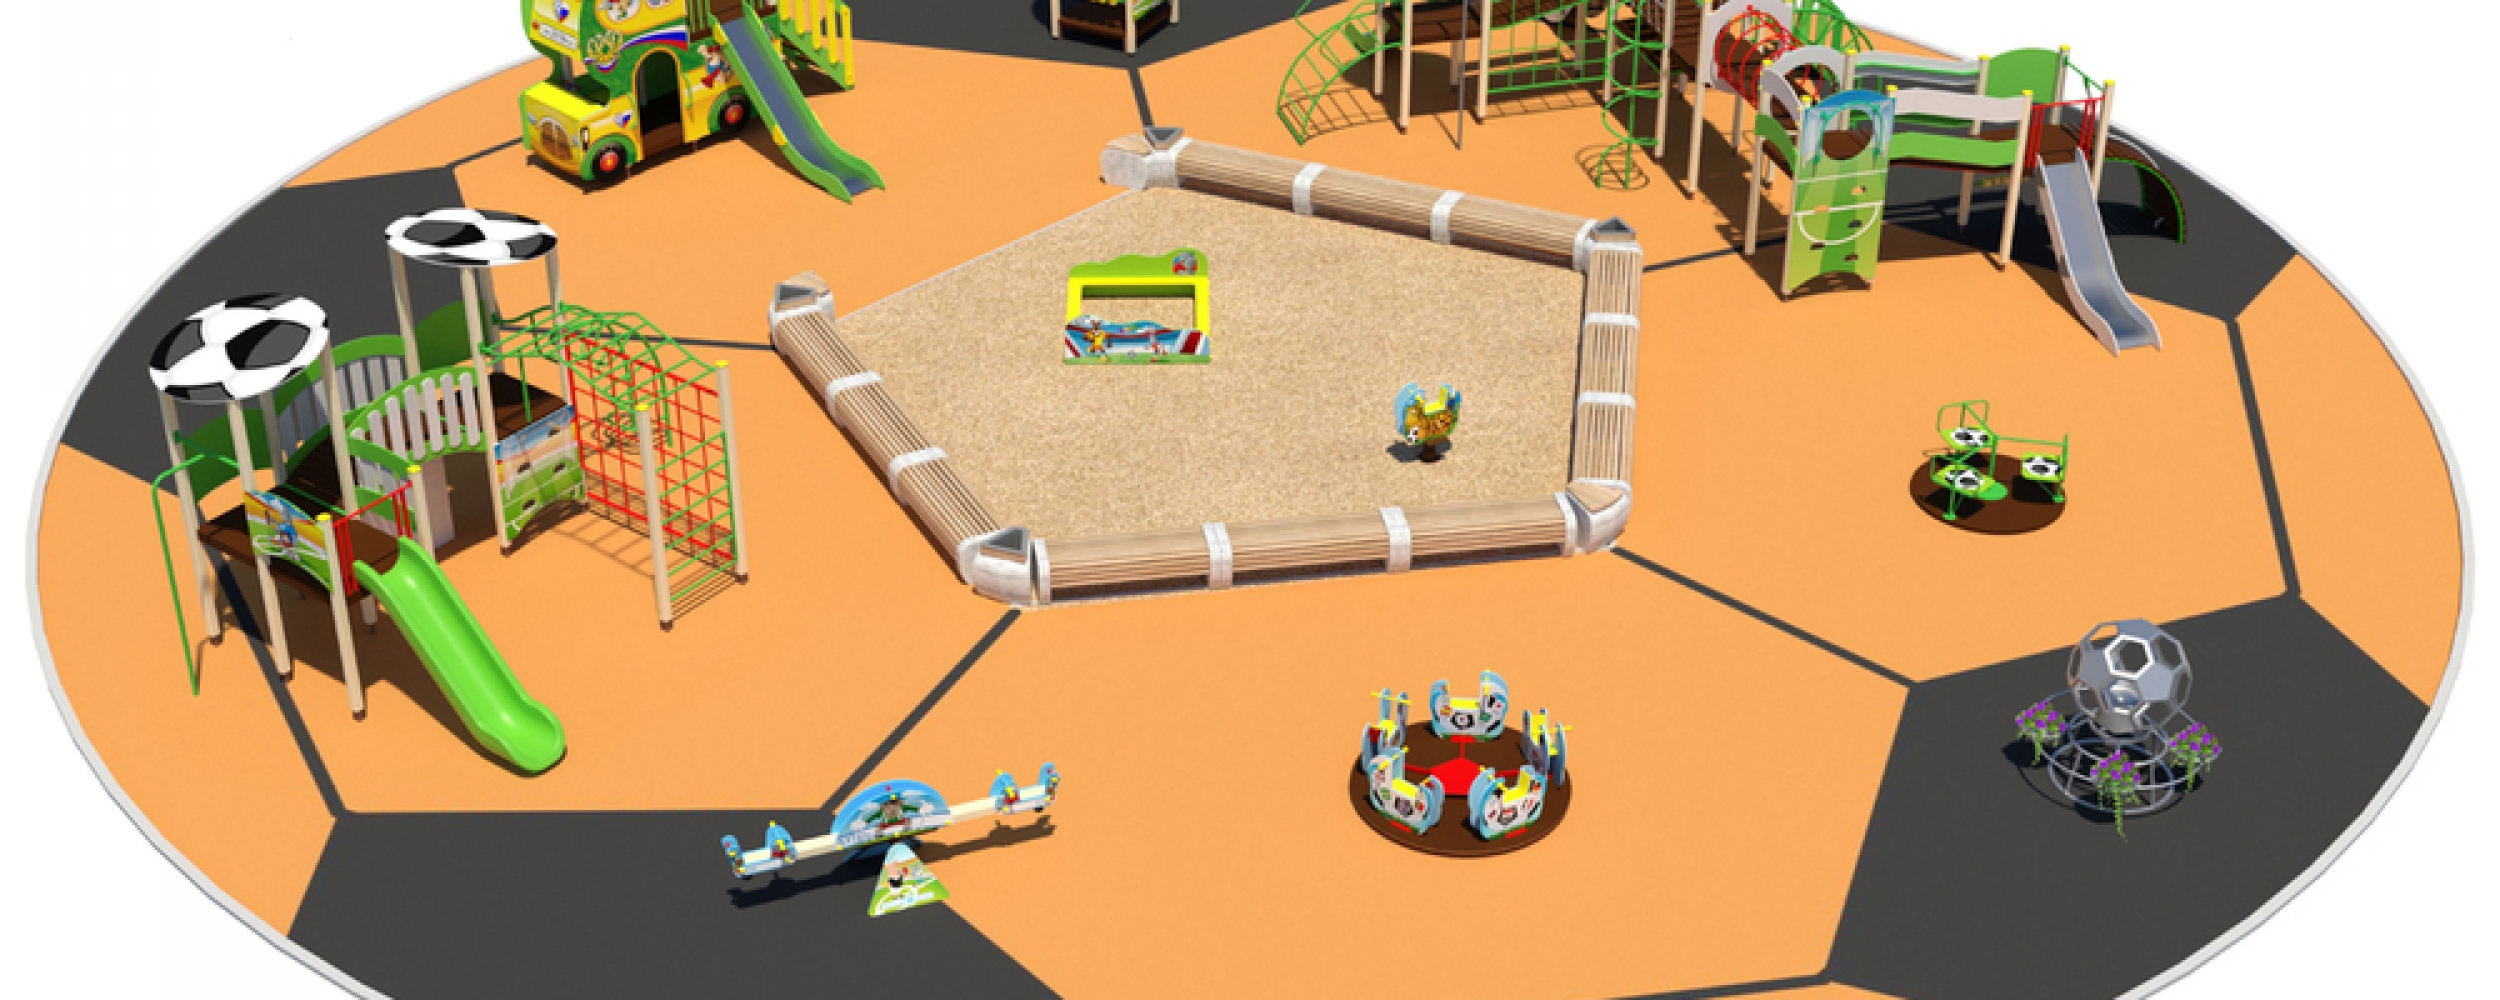 Детские площадки в стиле "Футбол"